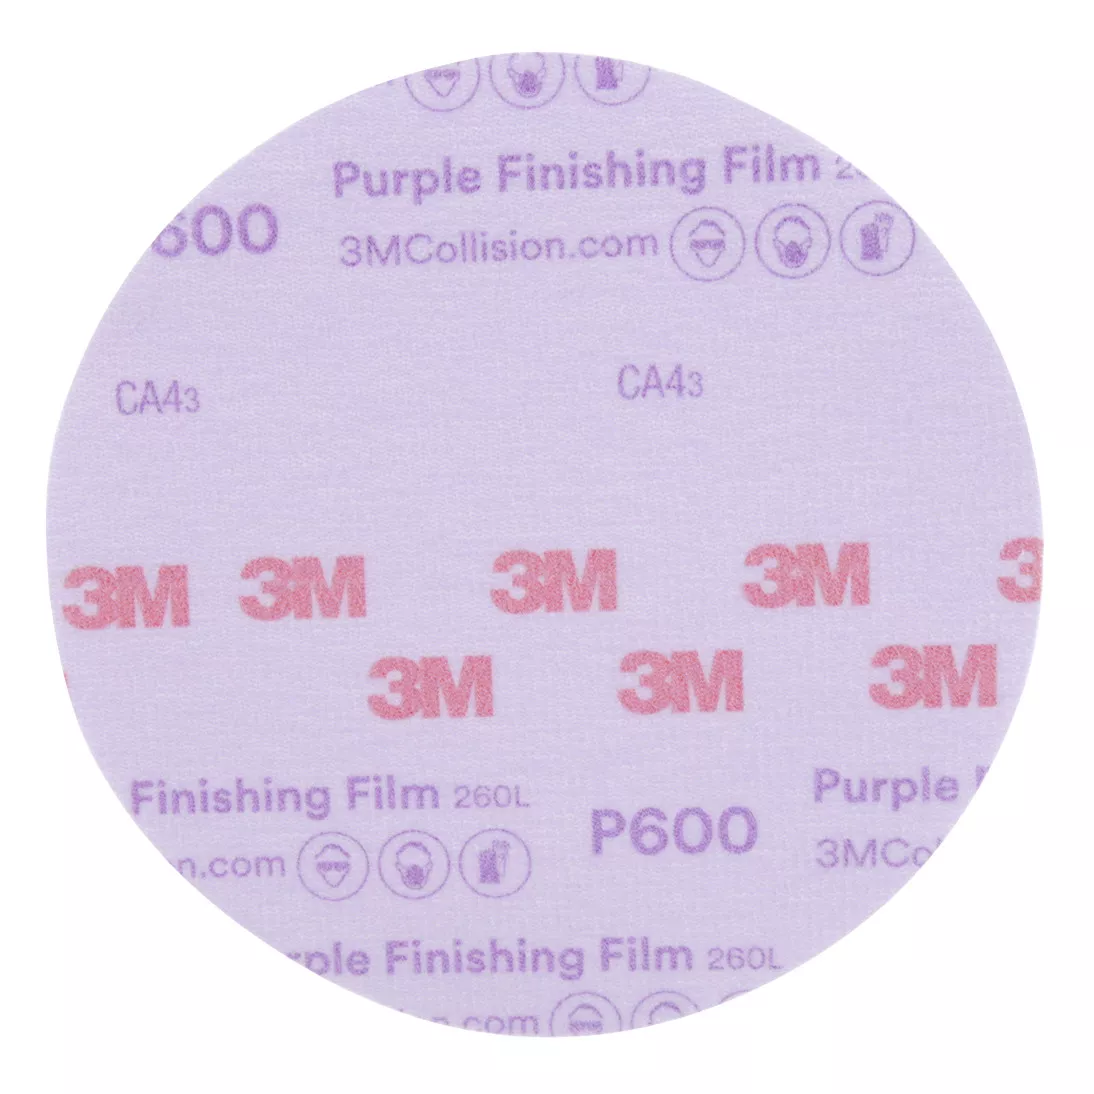 3M™ Hookit™ Purple Finishing Film Abrasive Disc 260L, 30671, 6 in, P600,
50 discs per carton, 4 cartons per case